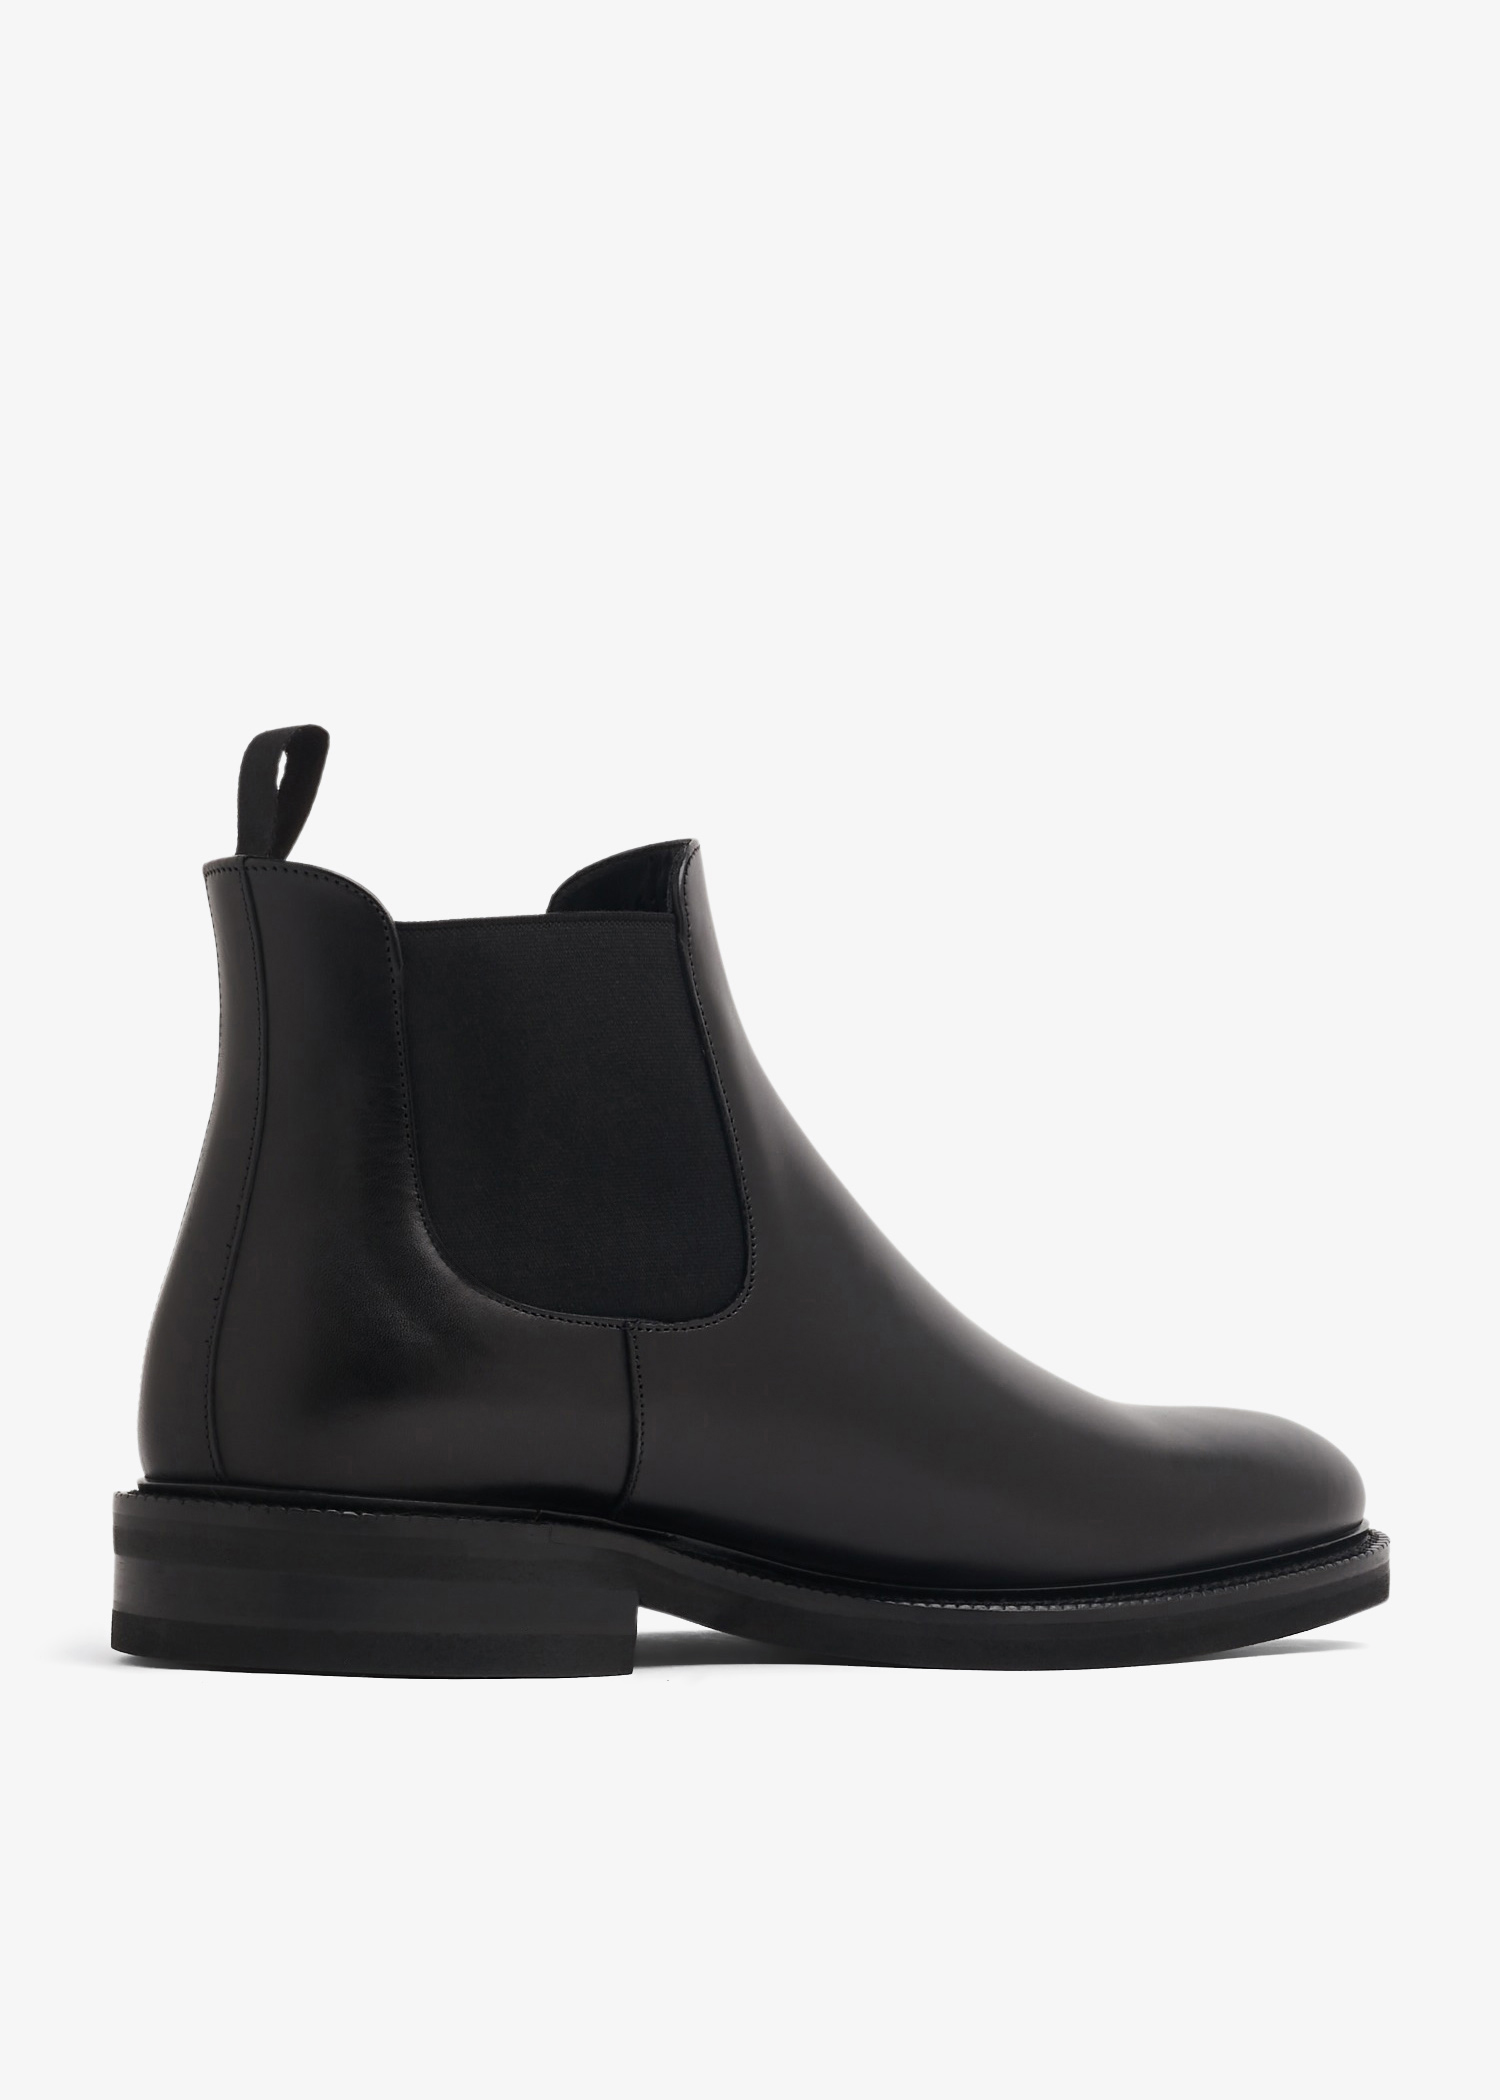 Mengloria Valor Chelsea boots for Men - Black in UAE | Level Shoes